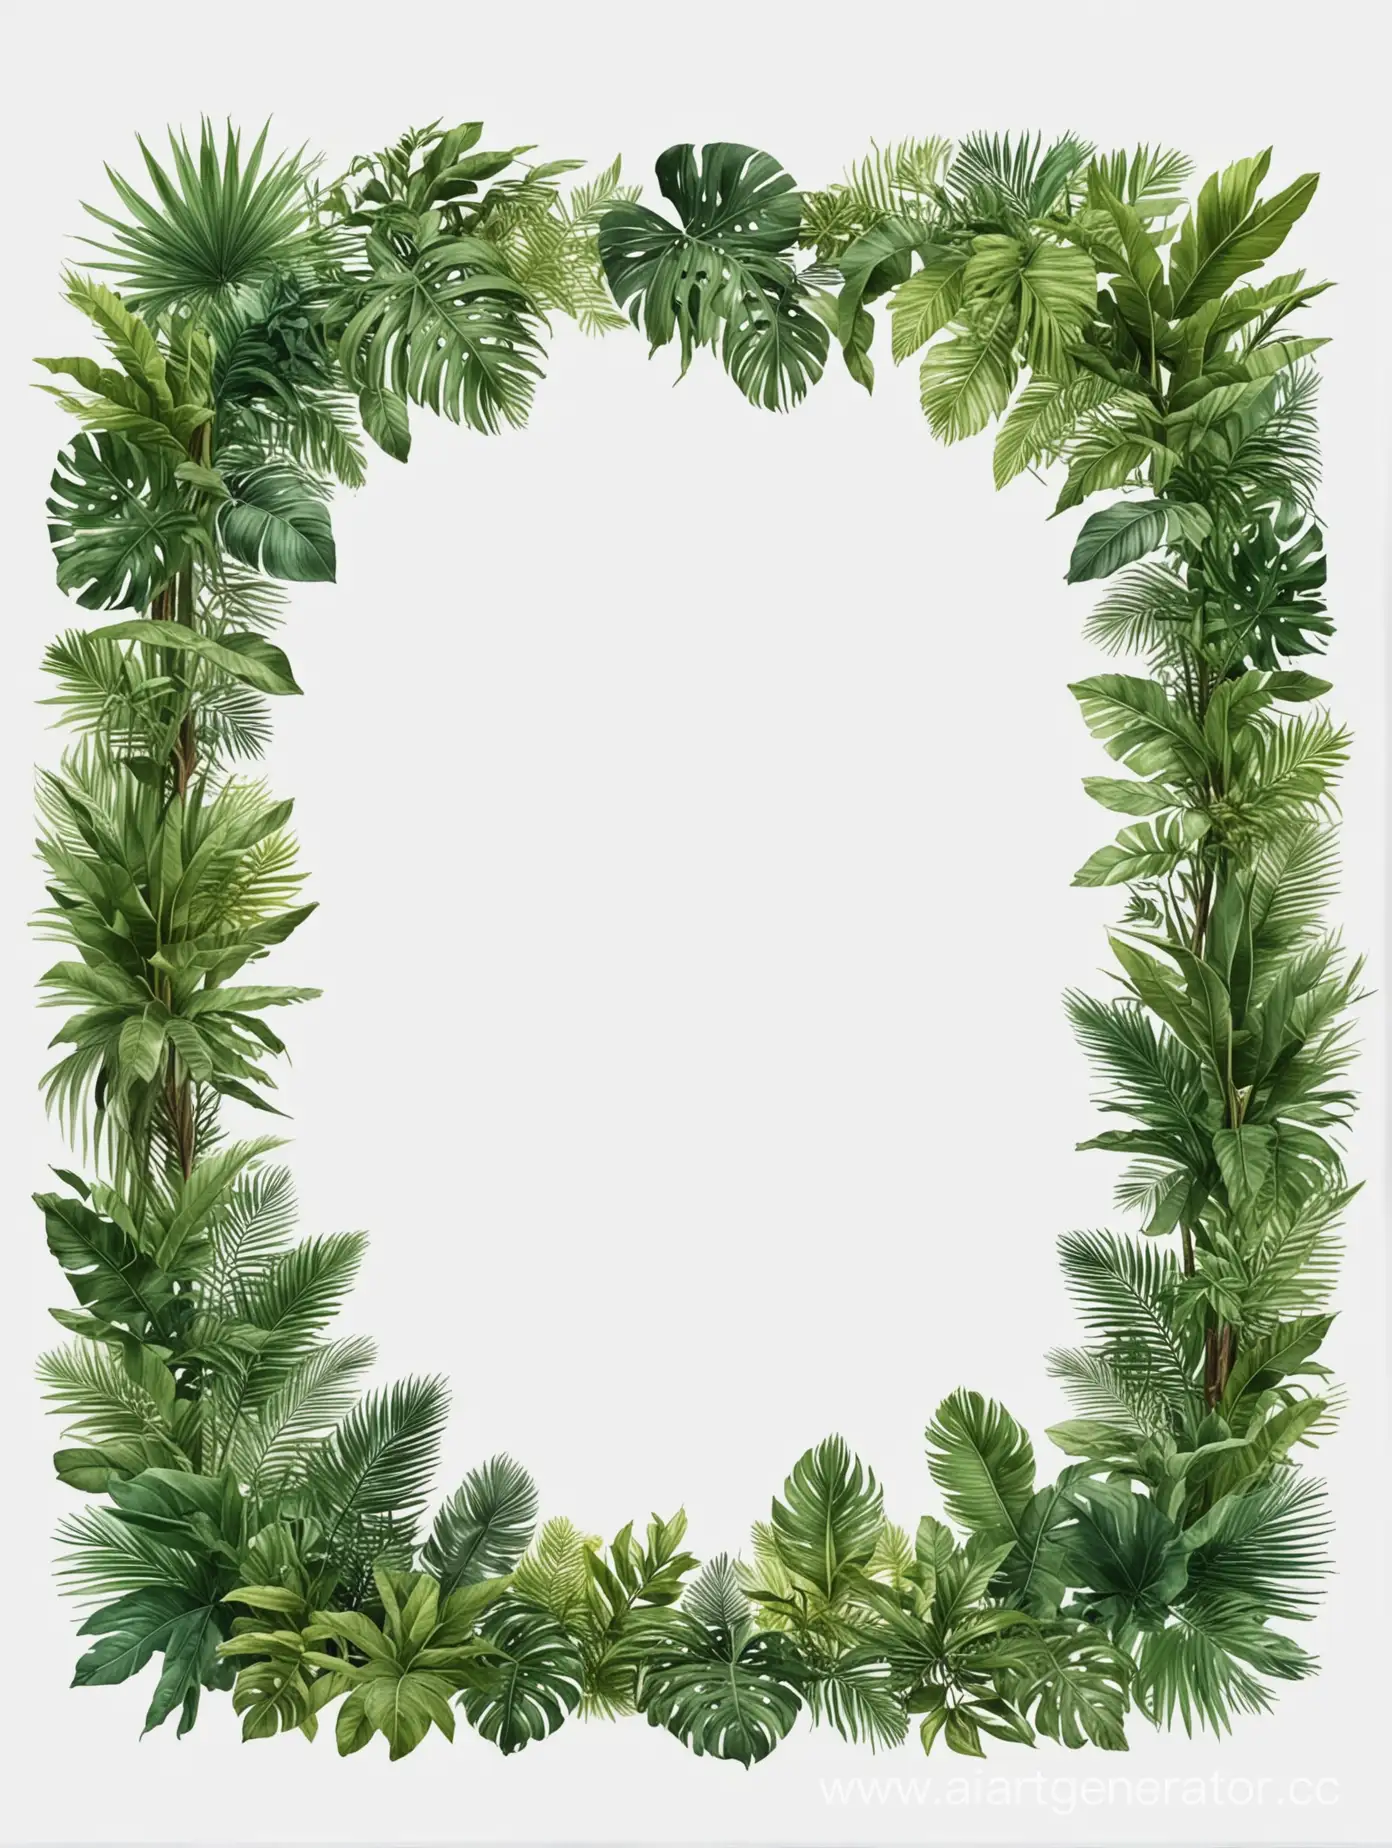 Lush-Jungle-Framed-on-White-Background-Tropical-Foliage-Artwork